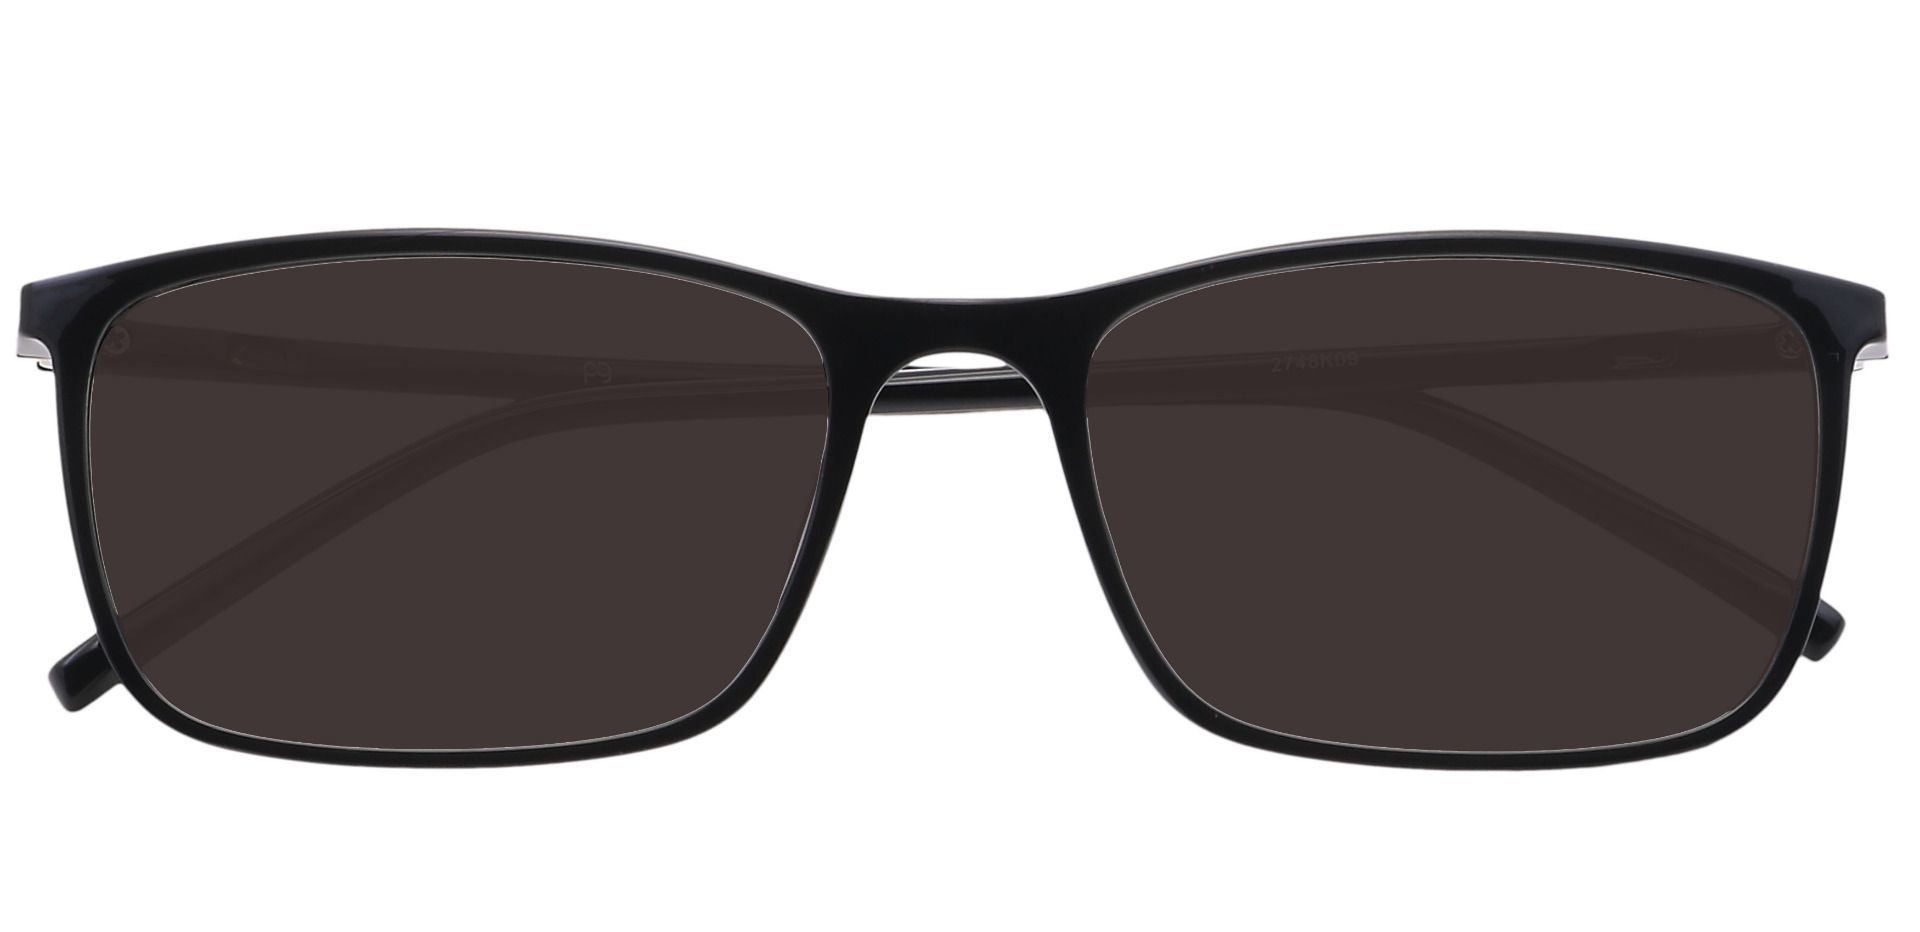 Fuji Rectangle Prescription Sunglasses - Black Frame With Gray Lenses